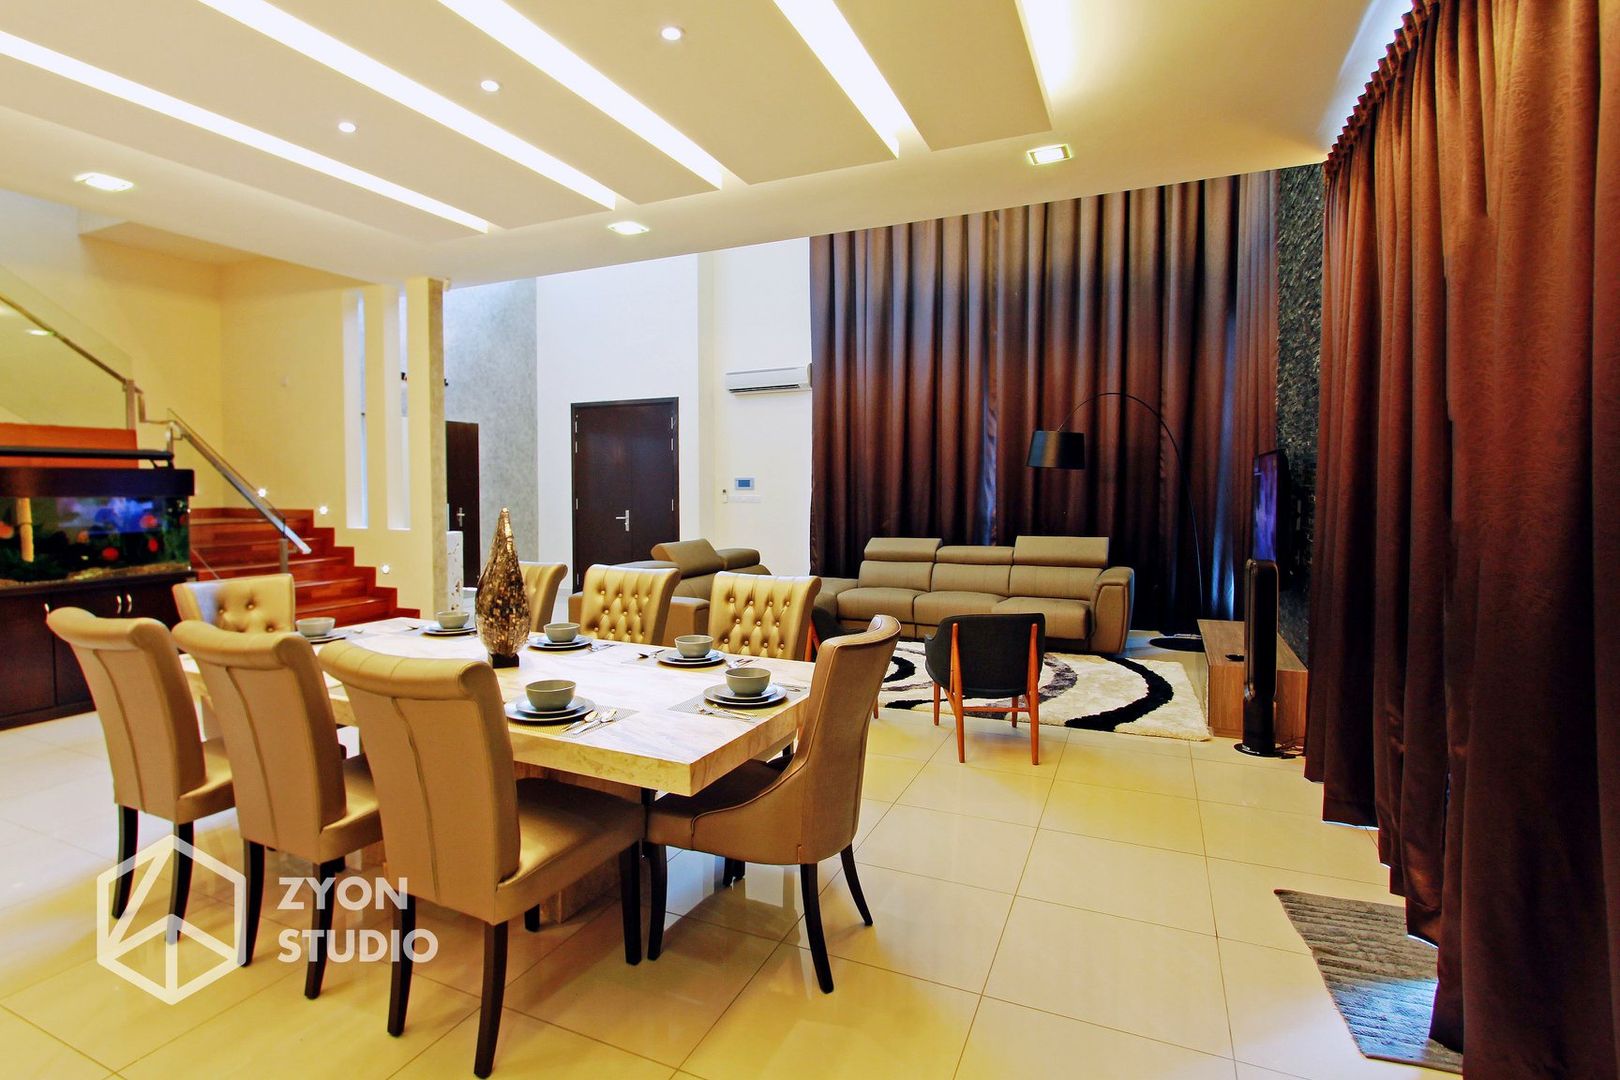 Kiara Residence Puchong, ZYON STUDIO SDN BHD (fka Zyon Interior Design Sdn Bhd) ZYON STUDIO SDN BHD (fka Zyon Interior Design Sdn Bhd) Modern dining room